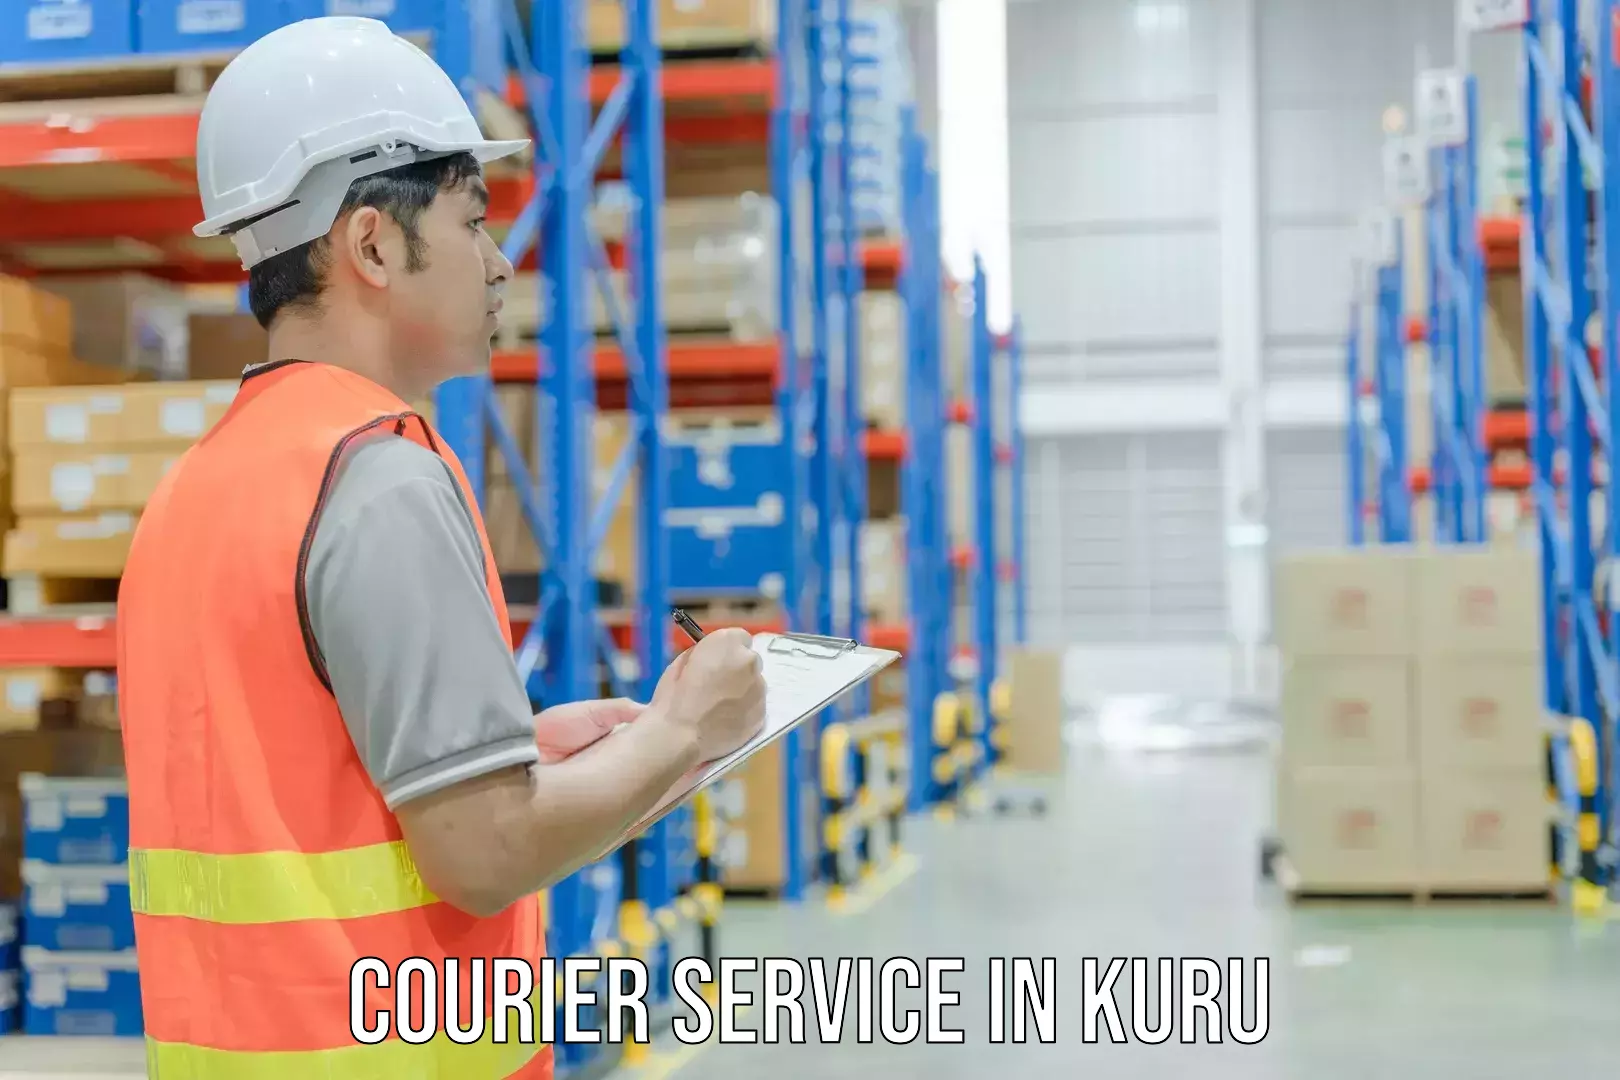 Business shipping needs in Kuru